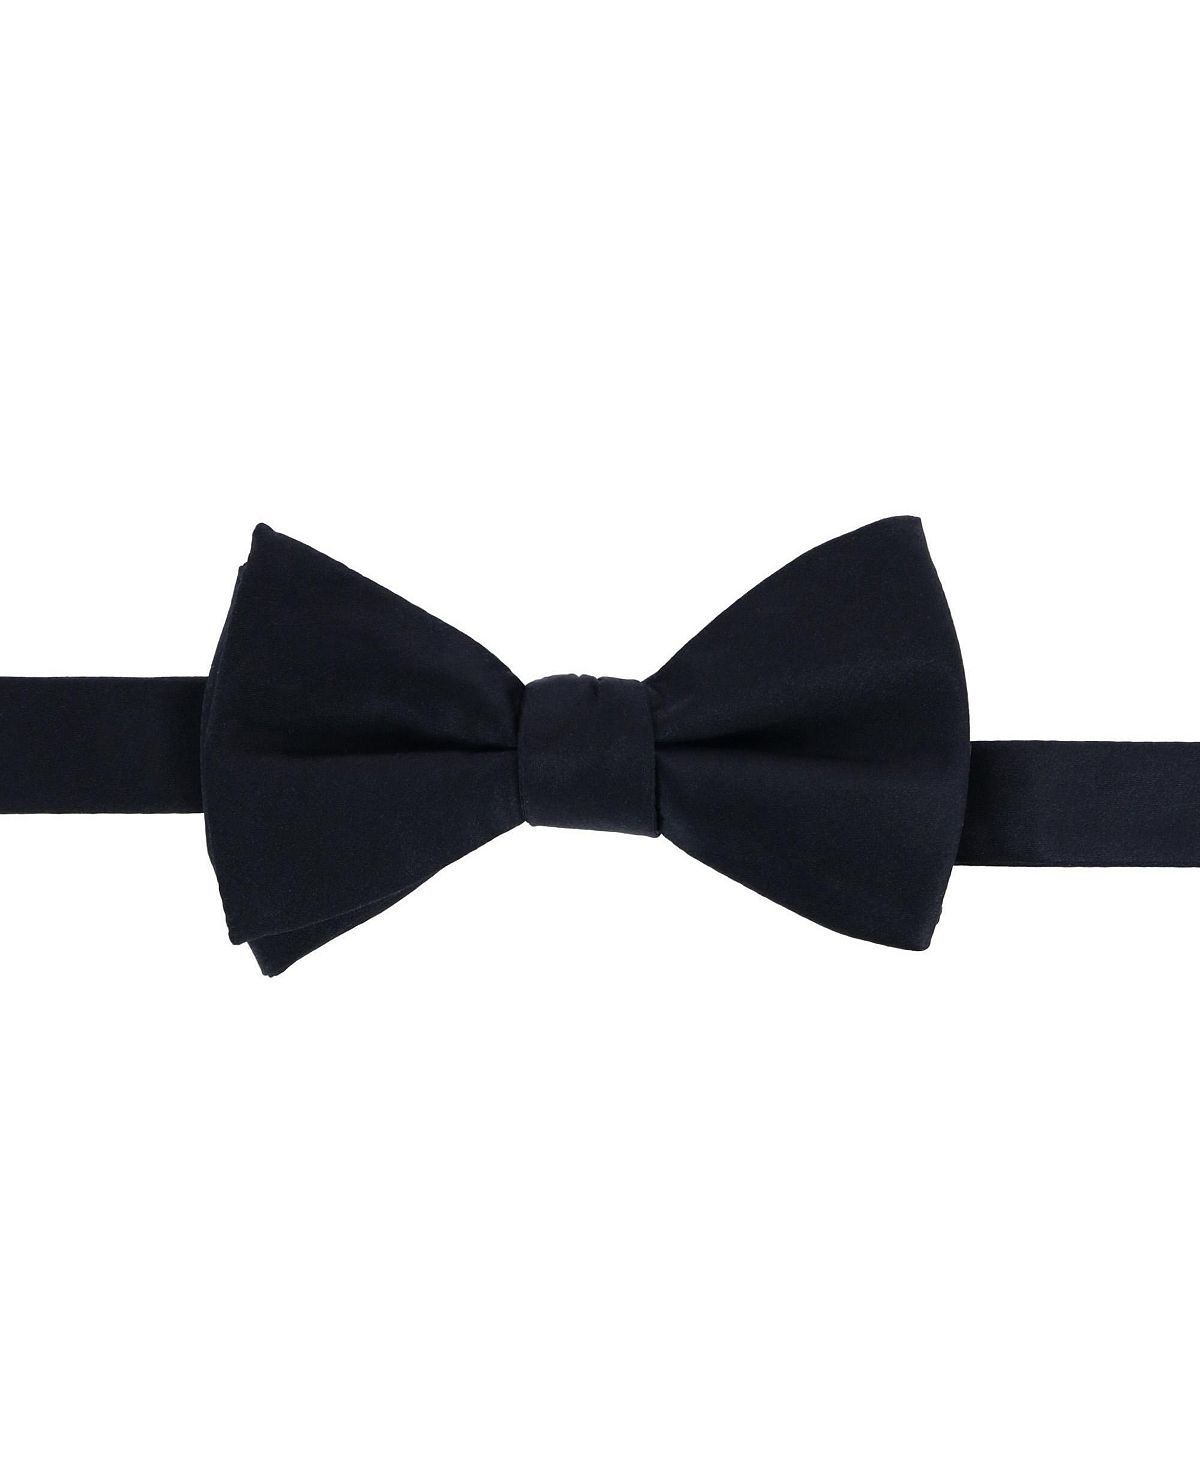 Однотонный шелковый галстук-бабочка Sutton TRAFALGAR мужской галстук бабочка с открытым бантом однотонный галстук бабочка 2019